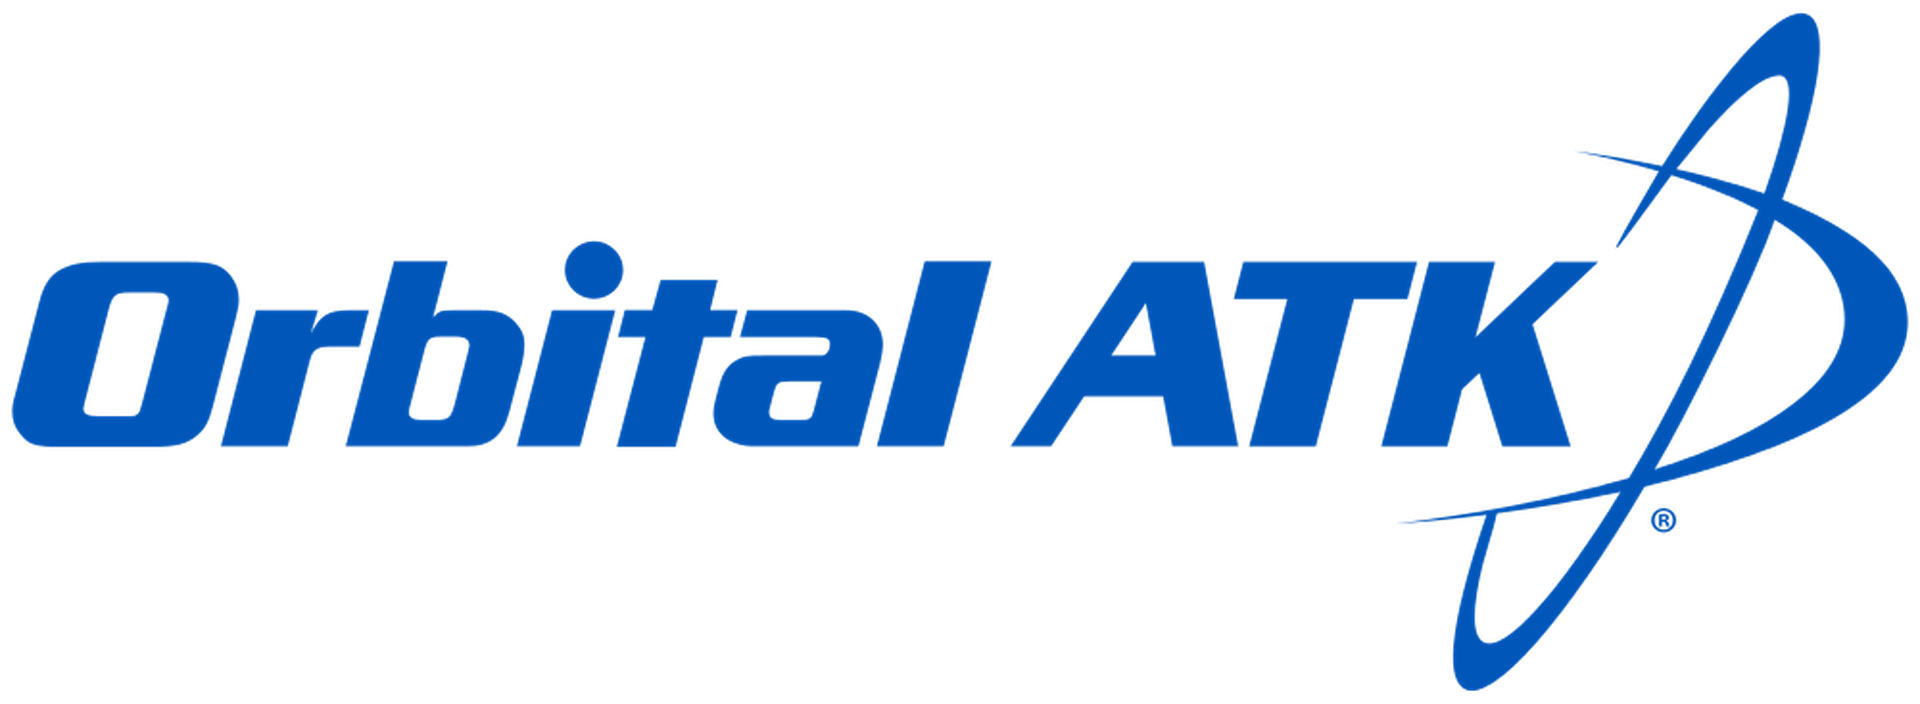 Orbital ATK's logo